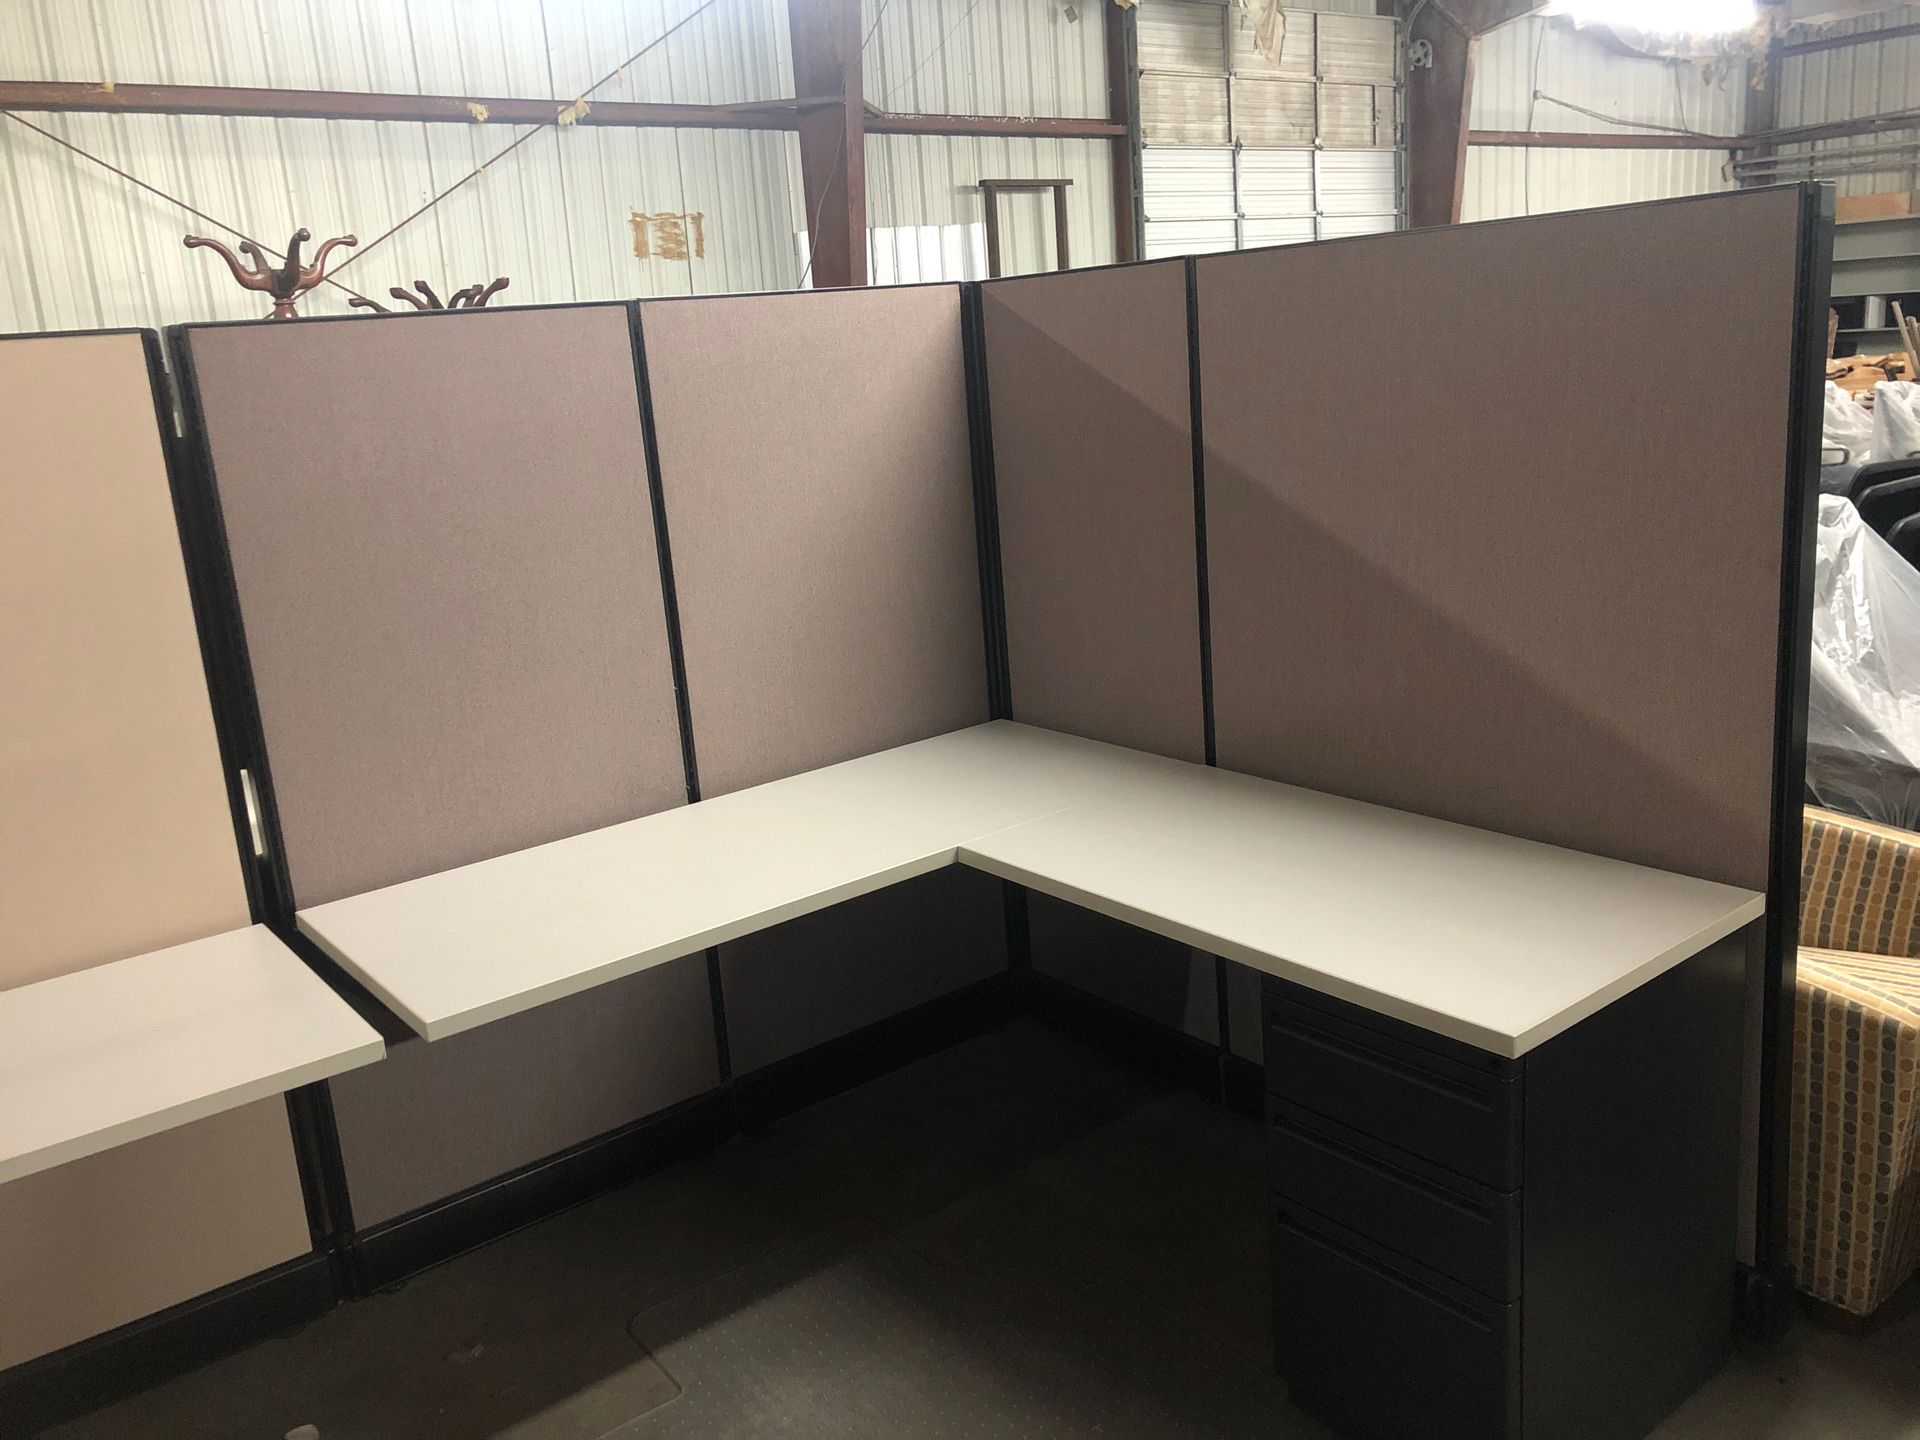 5’x6’ office cubicles HM